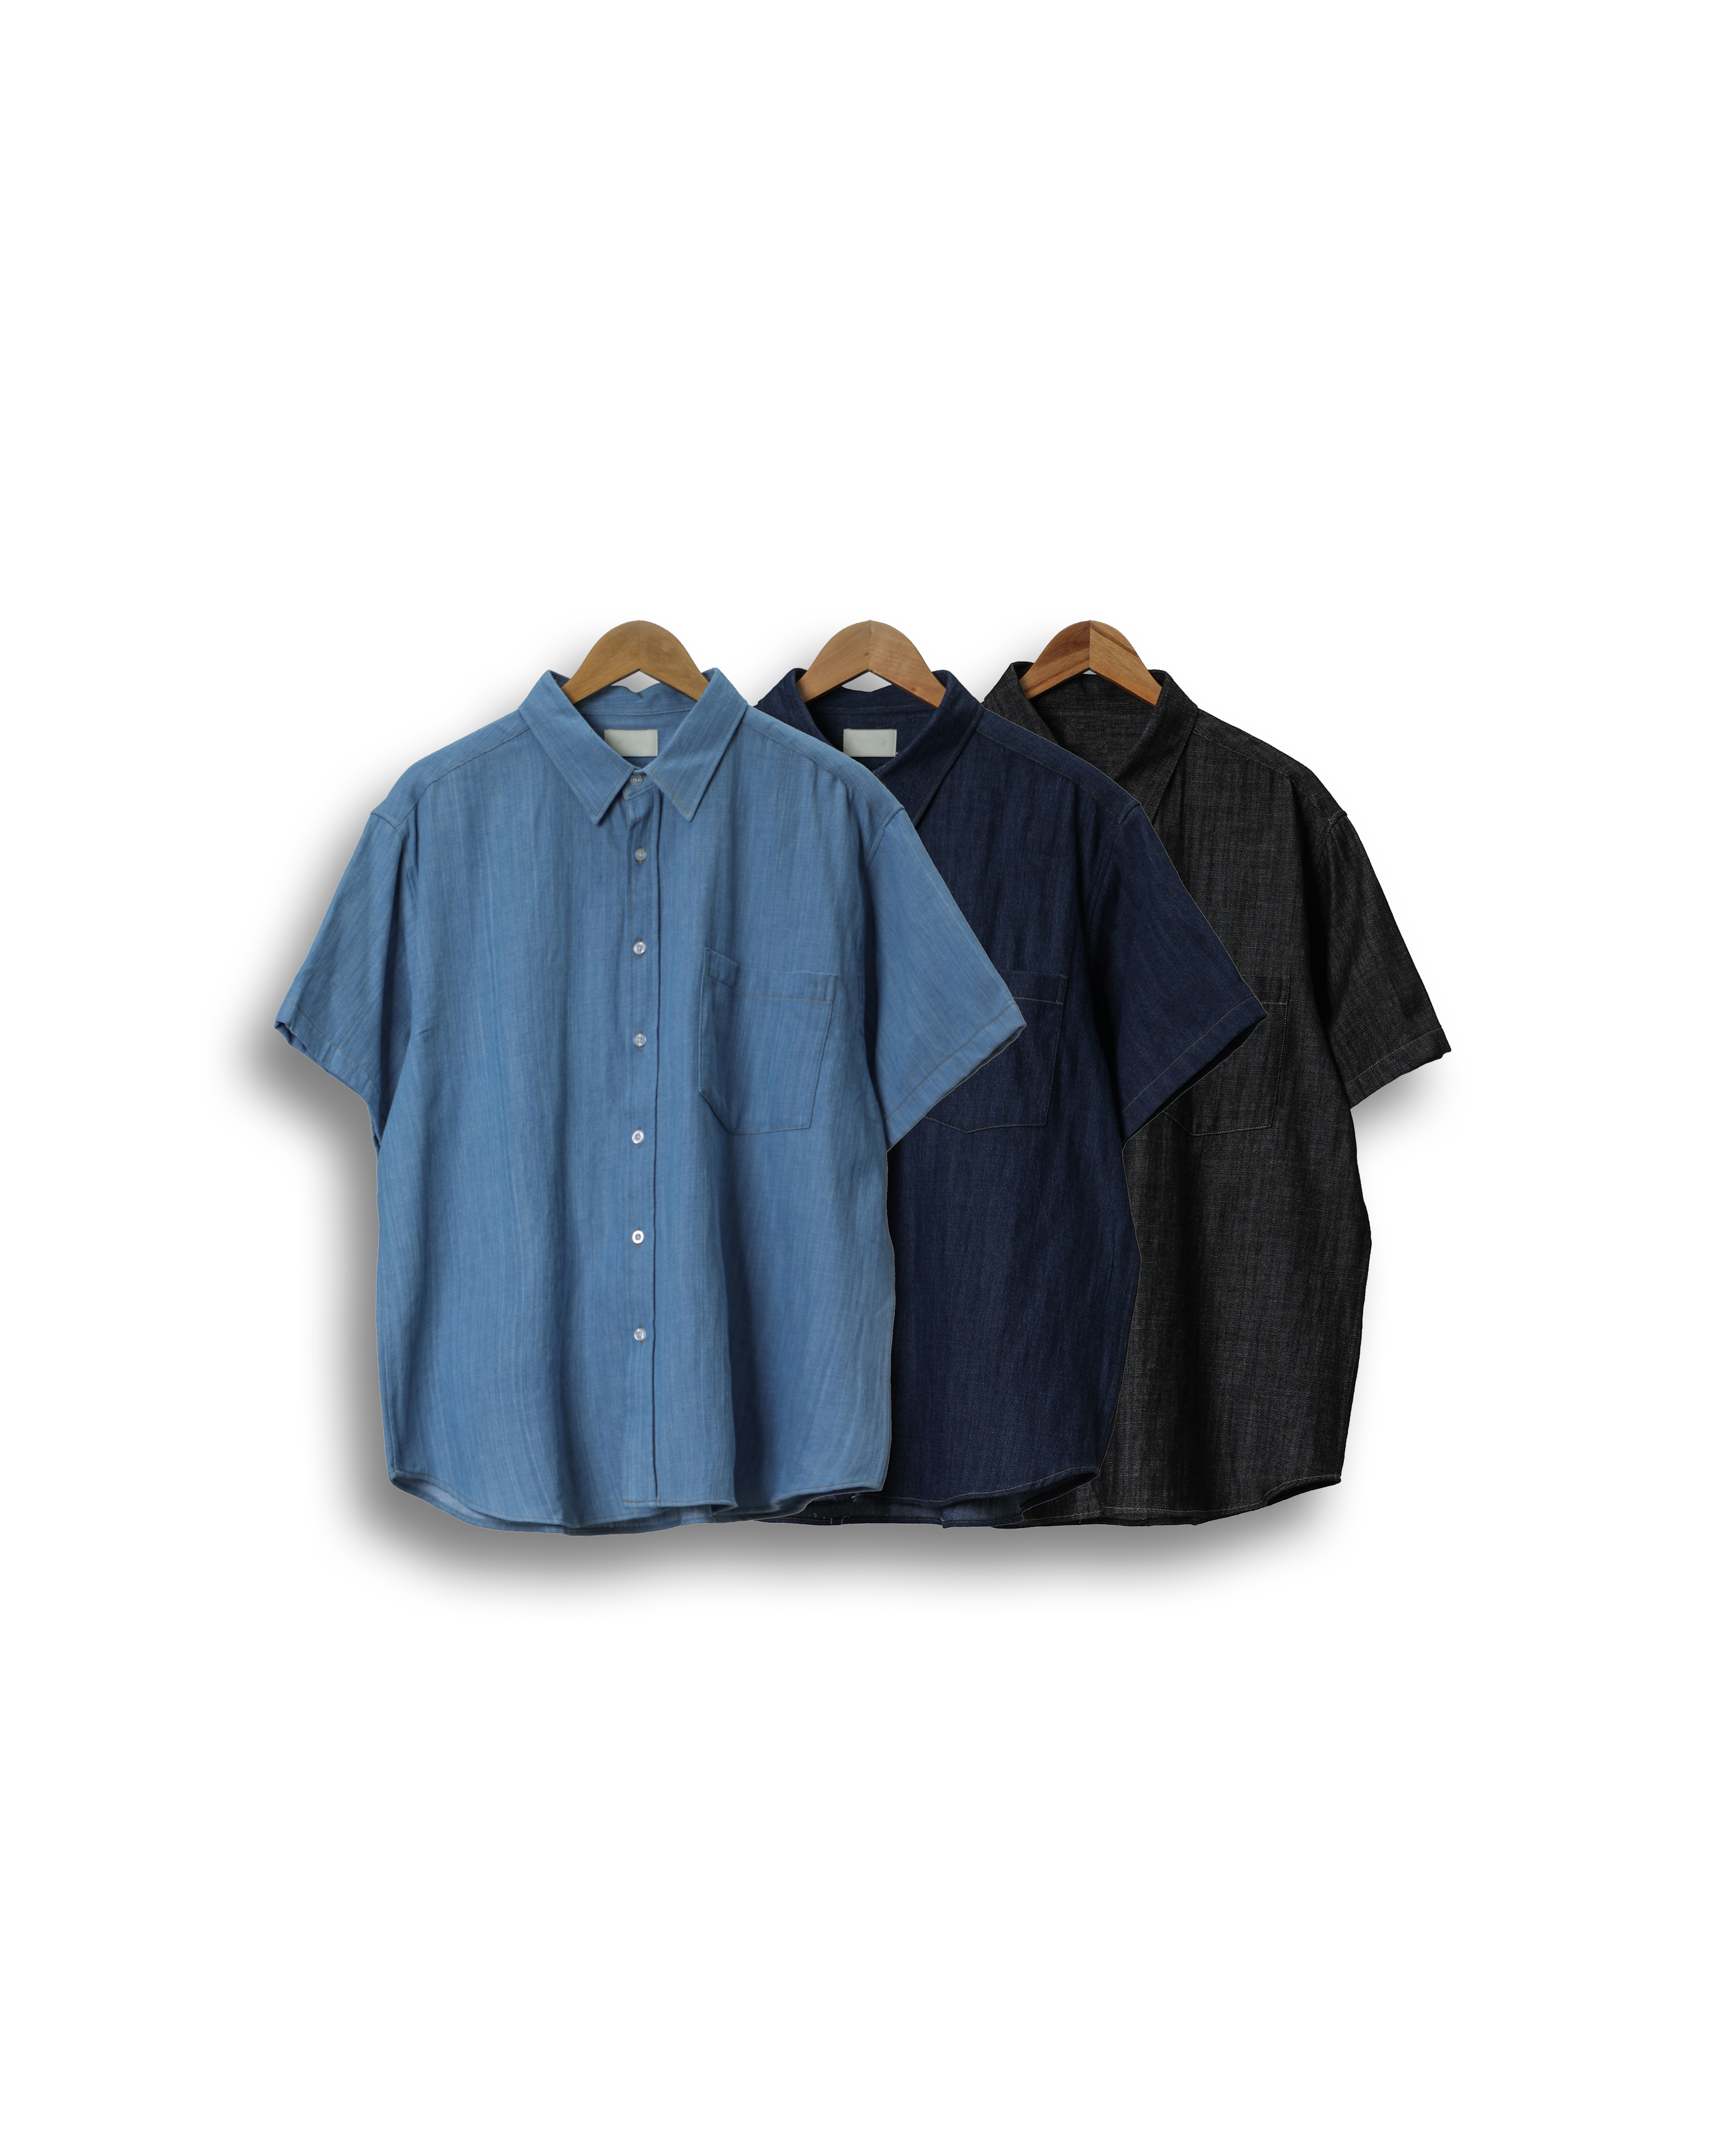 LFRK Slop Denim Over Half Shirts (Black Denim/Raw Denim/Light Denim)